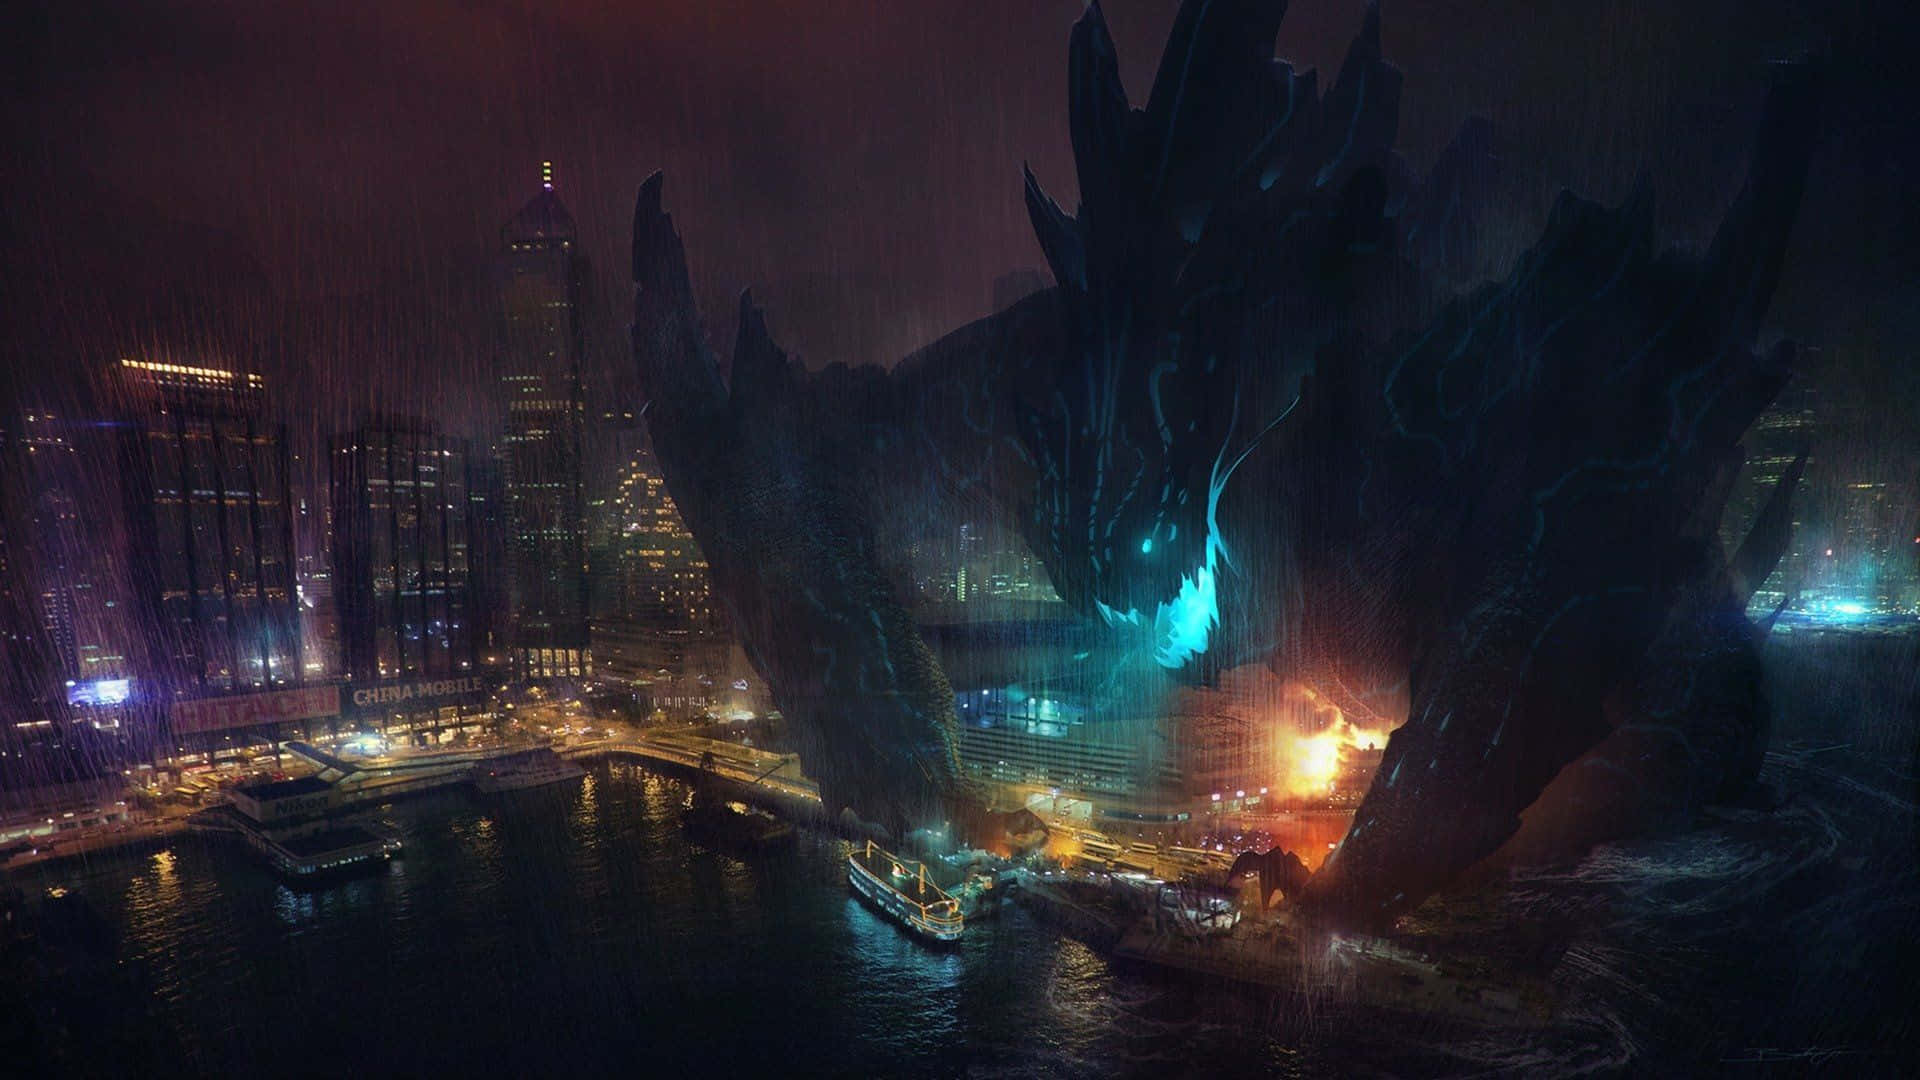 Caption: An Intense Battle Of Kaiju Giants Background